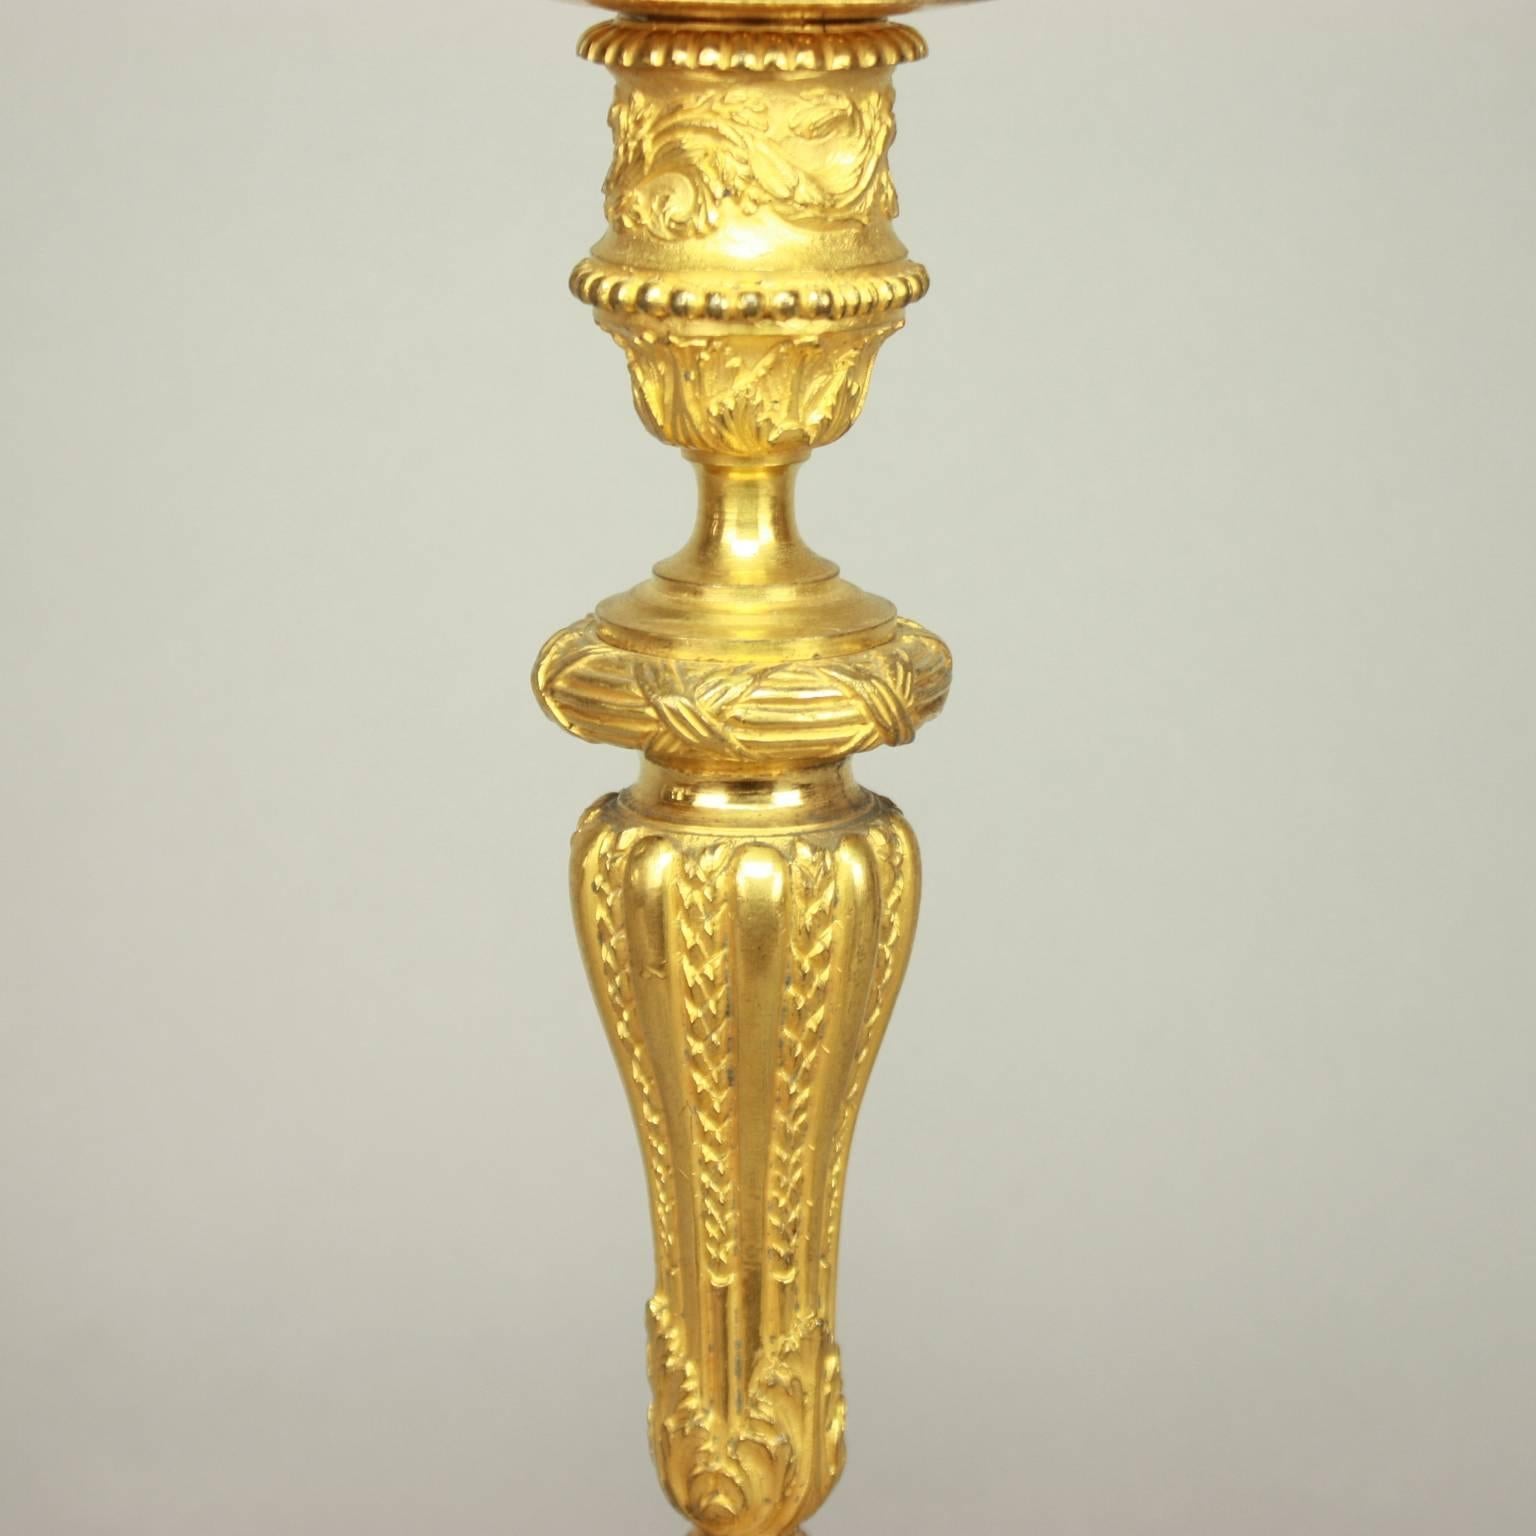 Pair of Late 19th Century Louis XVI Style Gilt-Bonze Candlesticks (Vergoldet)